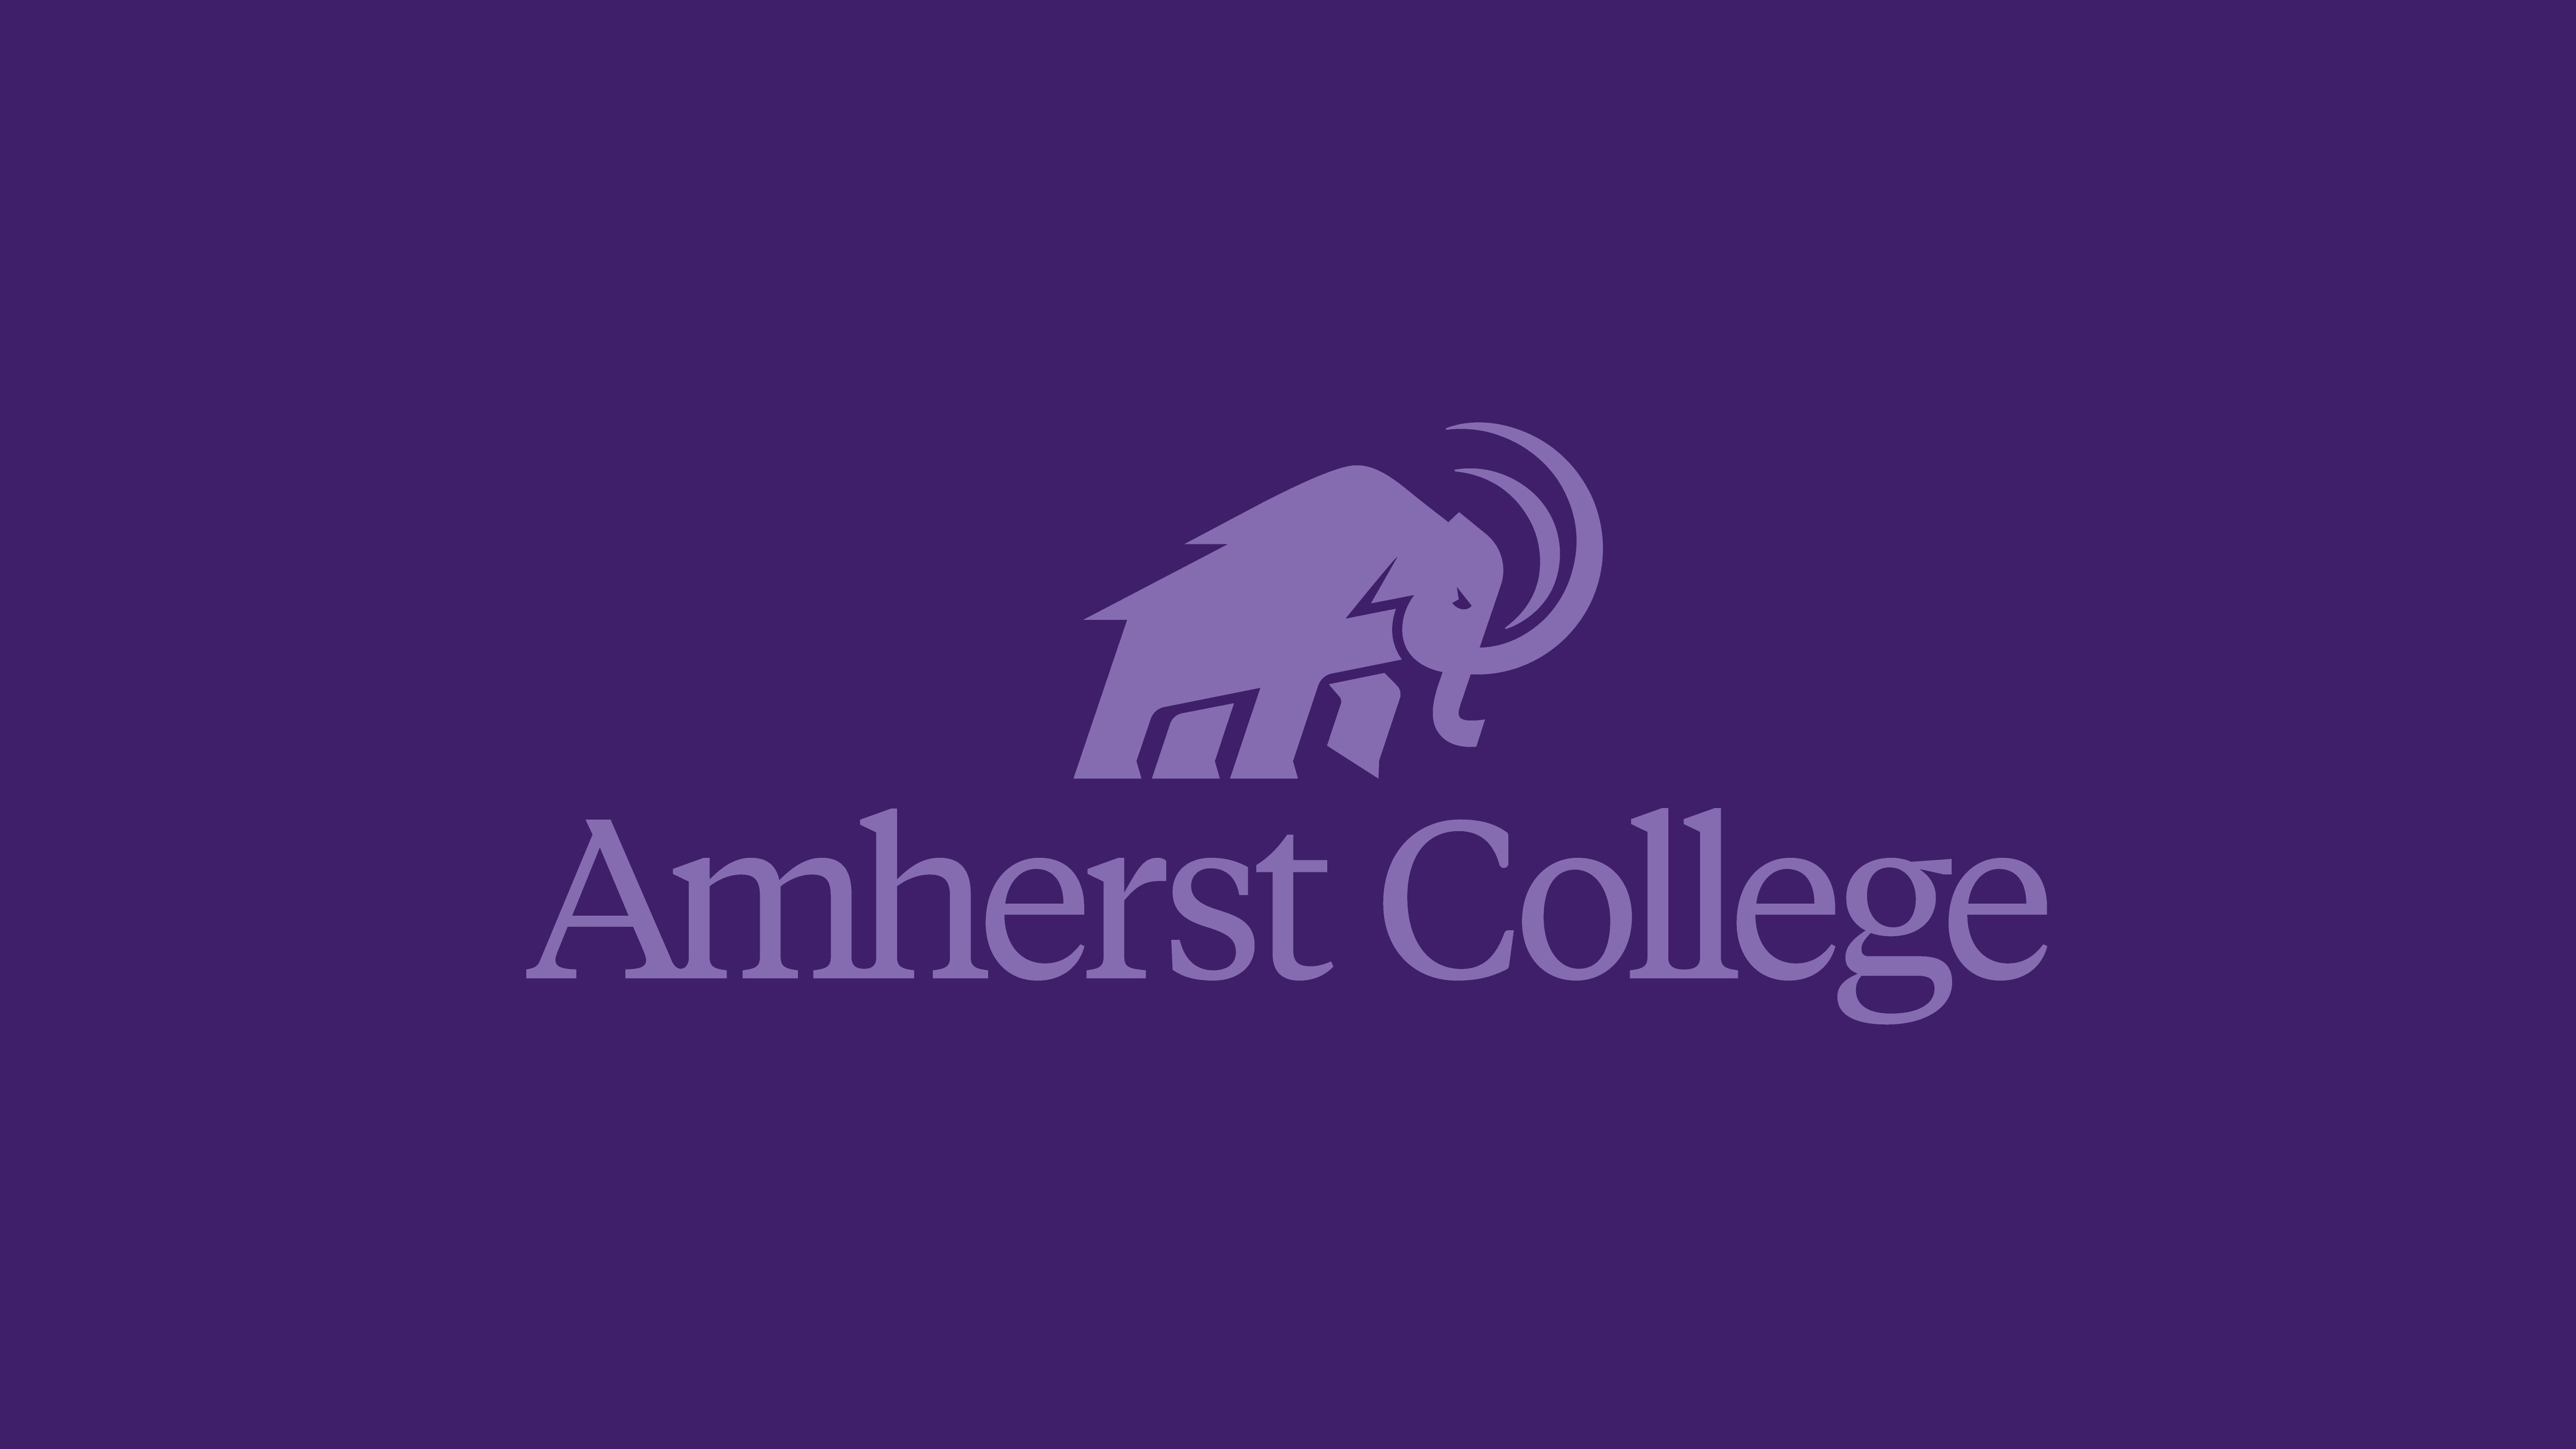 Light purple mammoth logo and Amherst College wordmark on dark purple background